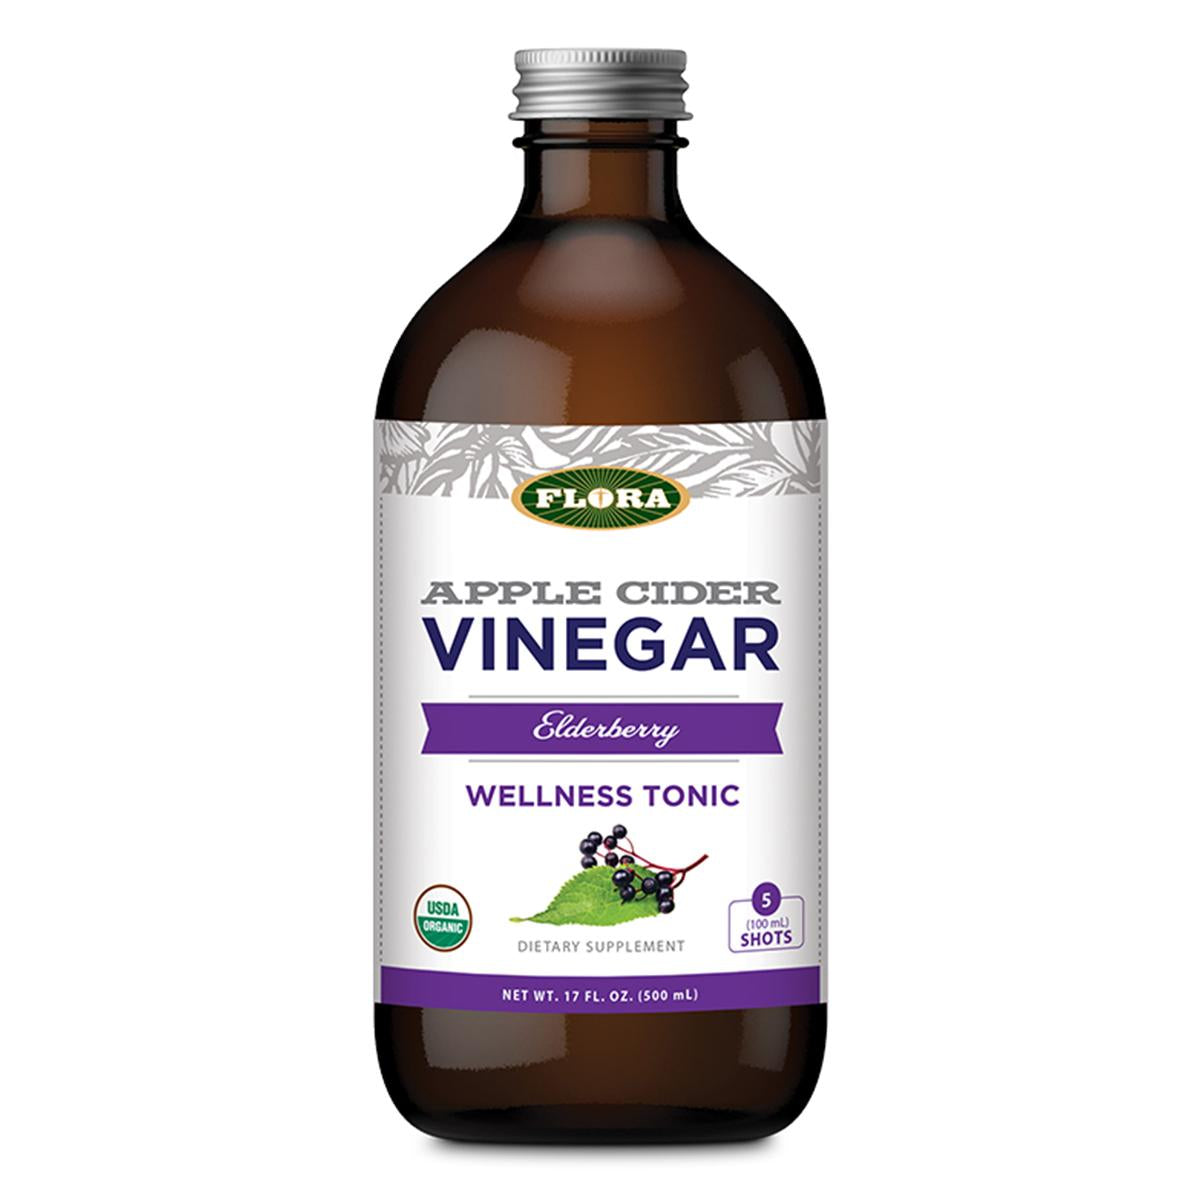 Primary image of Apple Cider Vinegar Wellness Tonic (Elderberry)